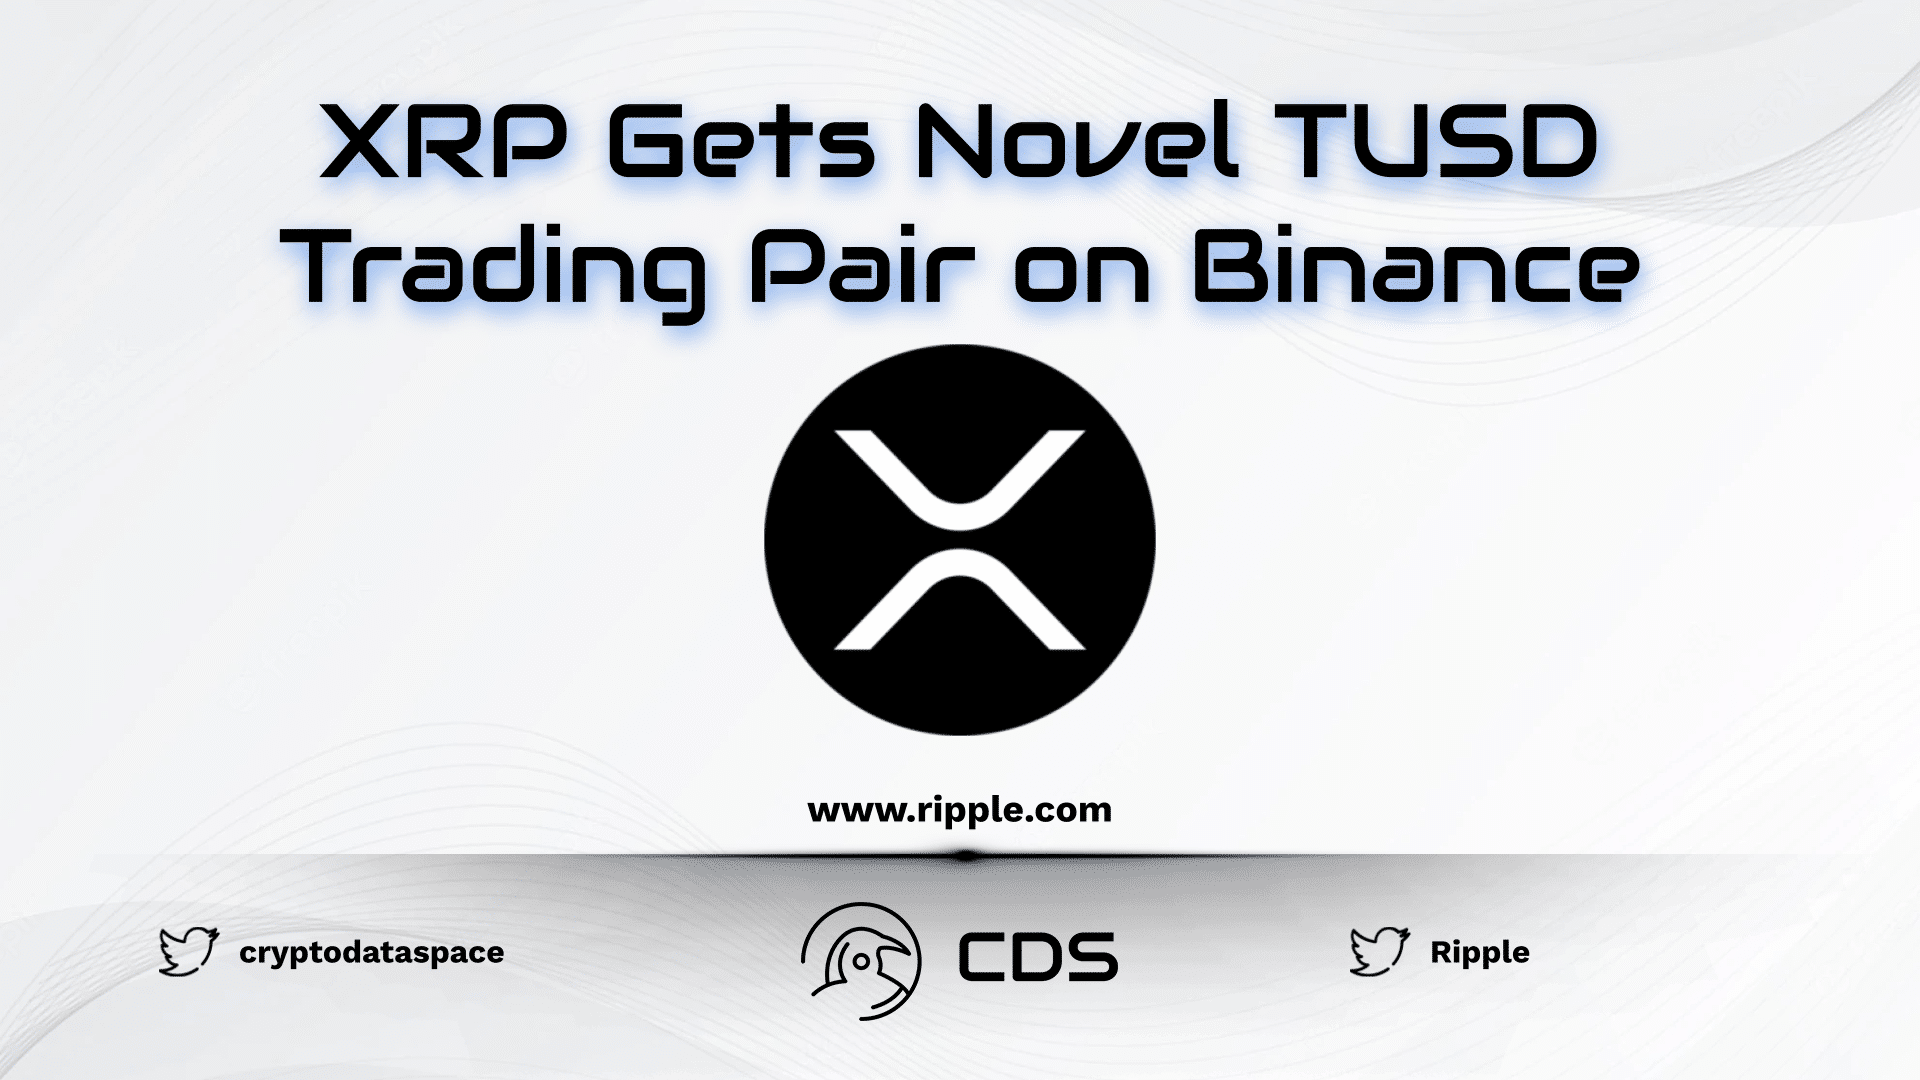 XRP Gets Novel TUSD Trading Pair on Binance